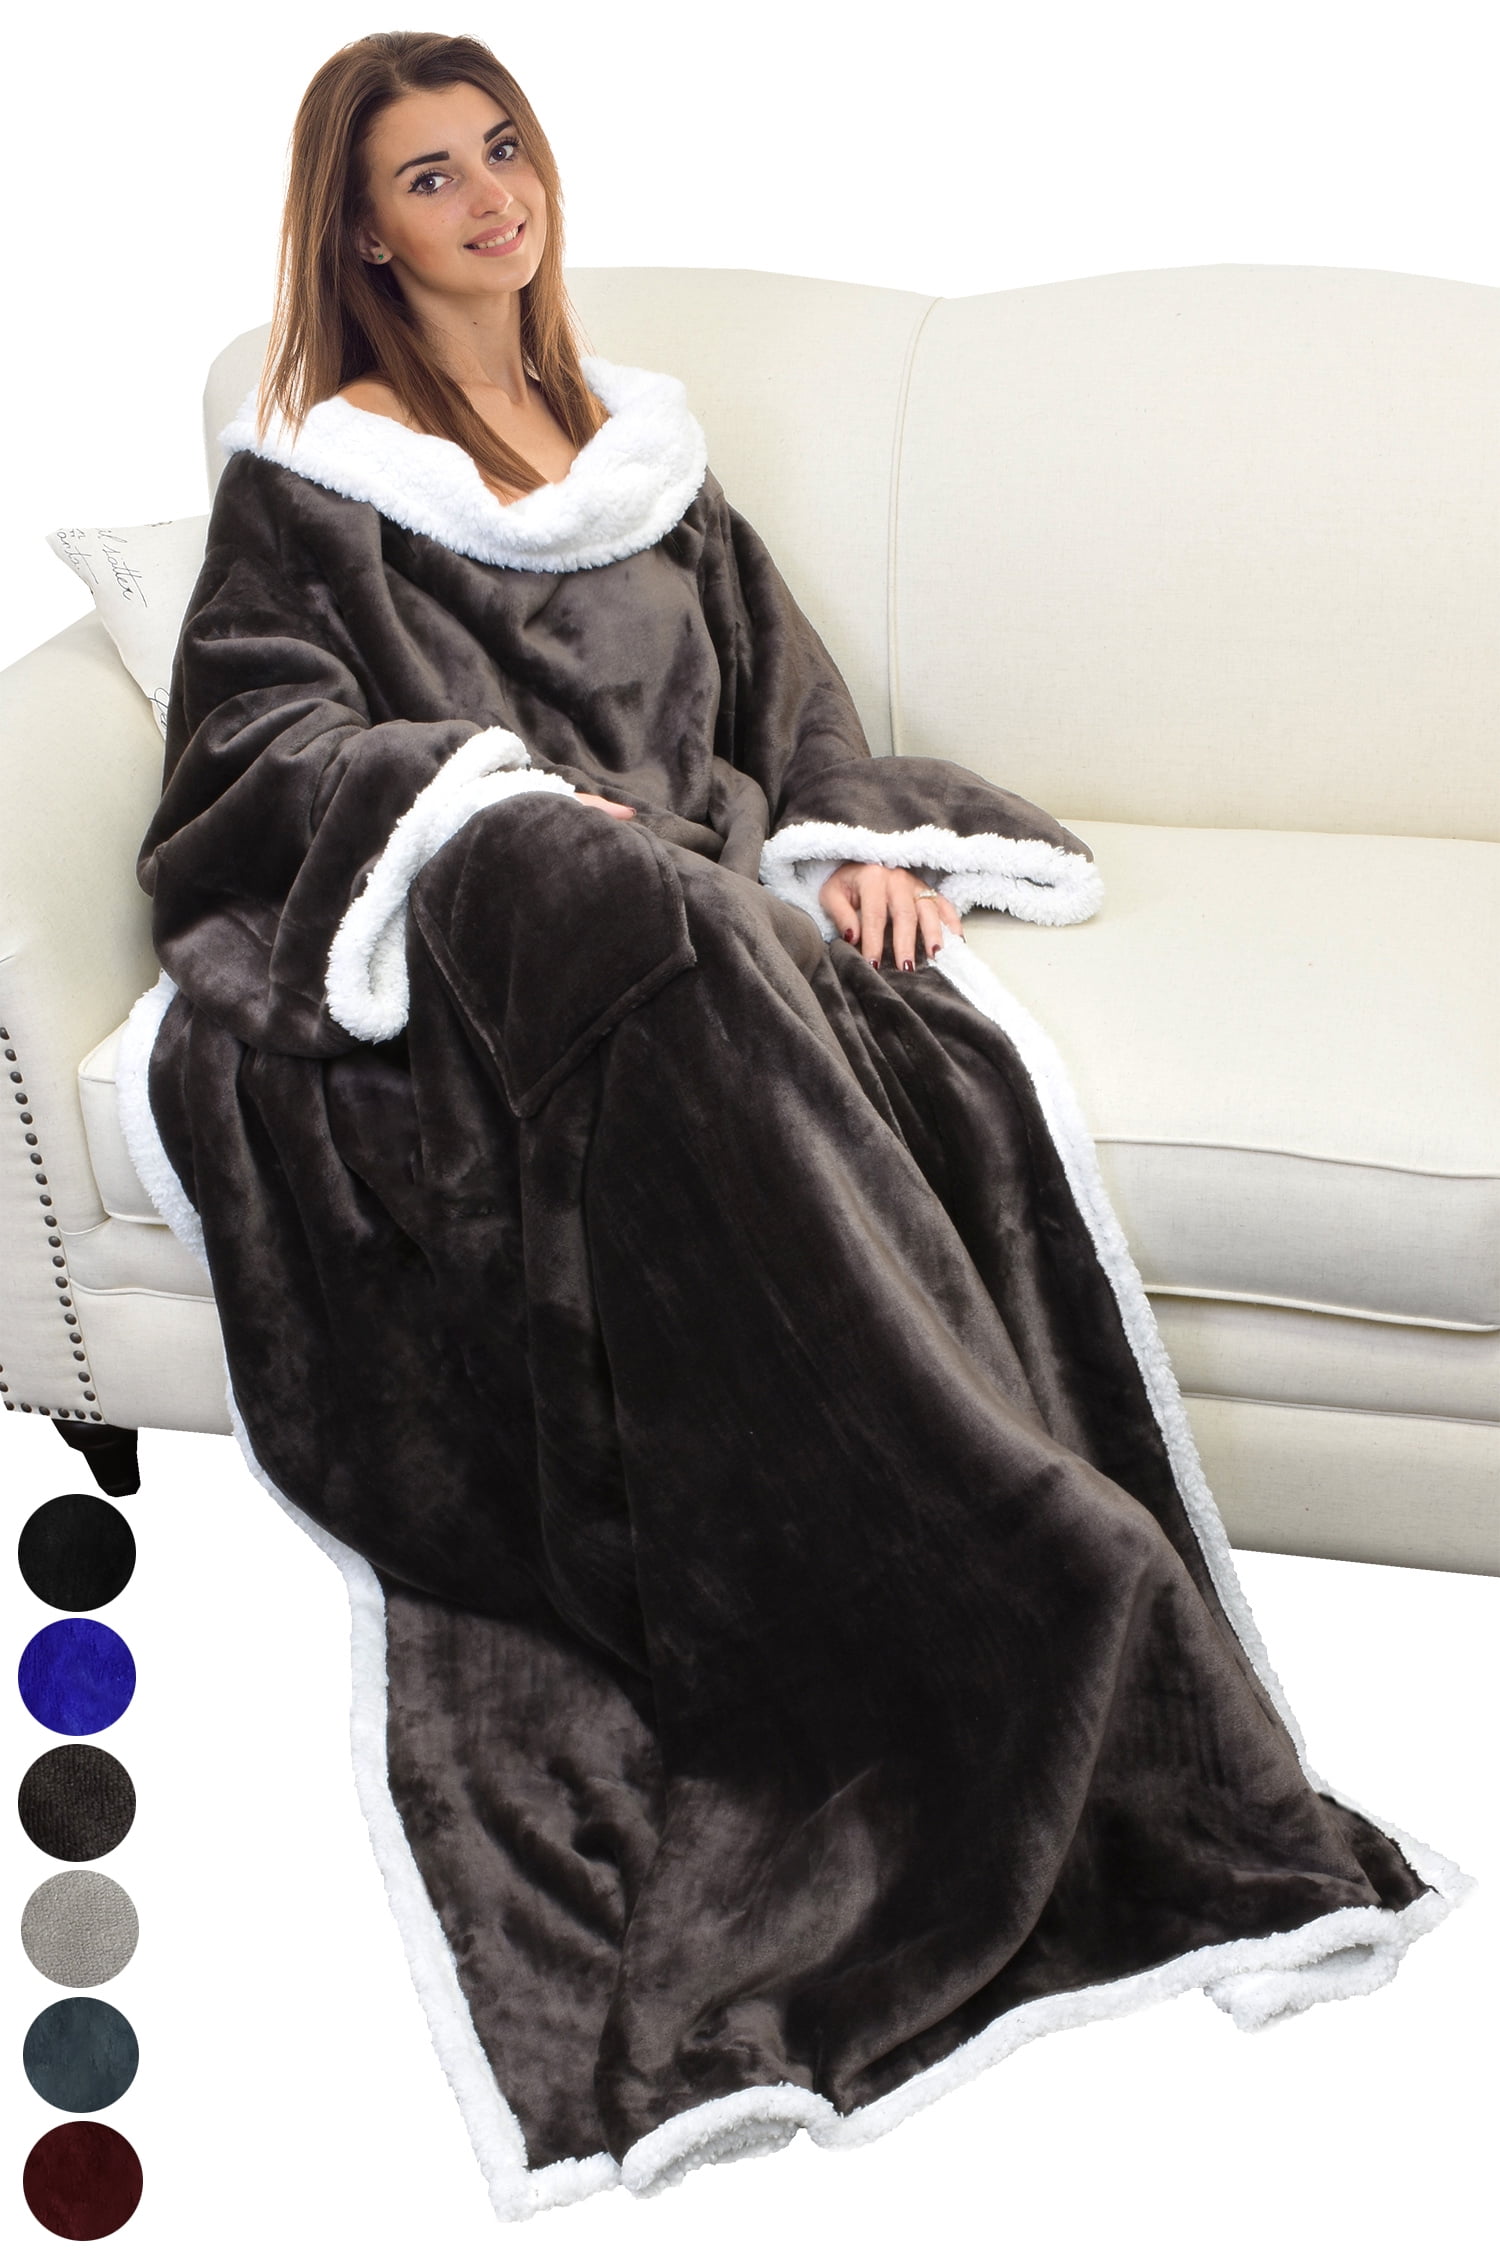 Snuggie Fleece Wearable Blanket with Sleeves Pocket  *New in Package*